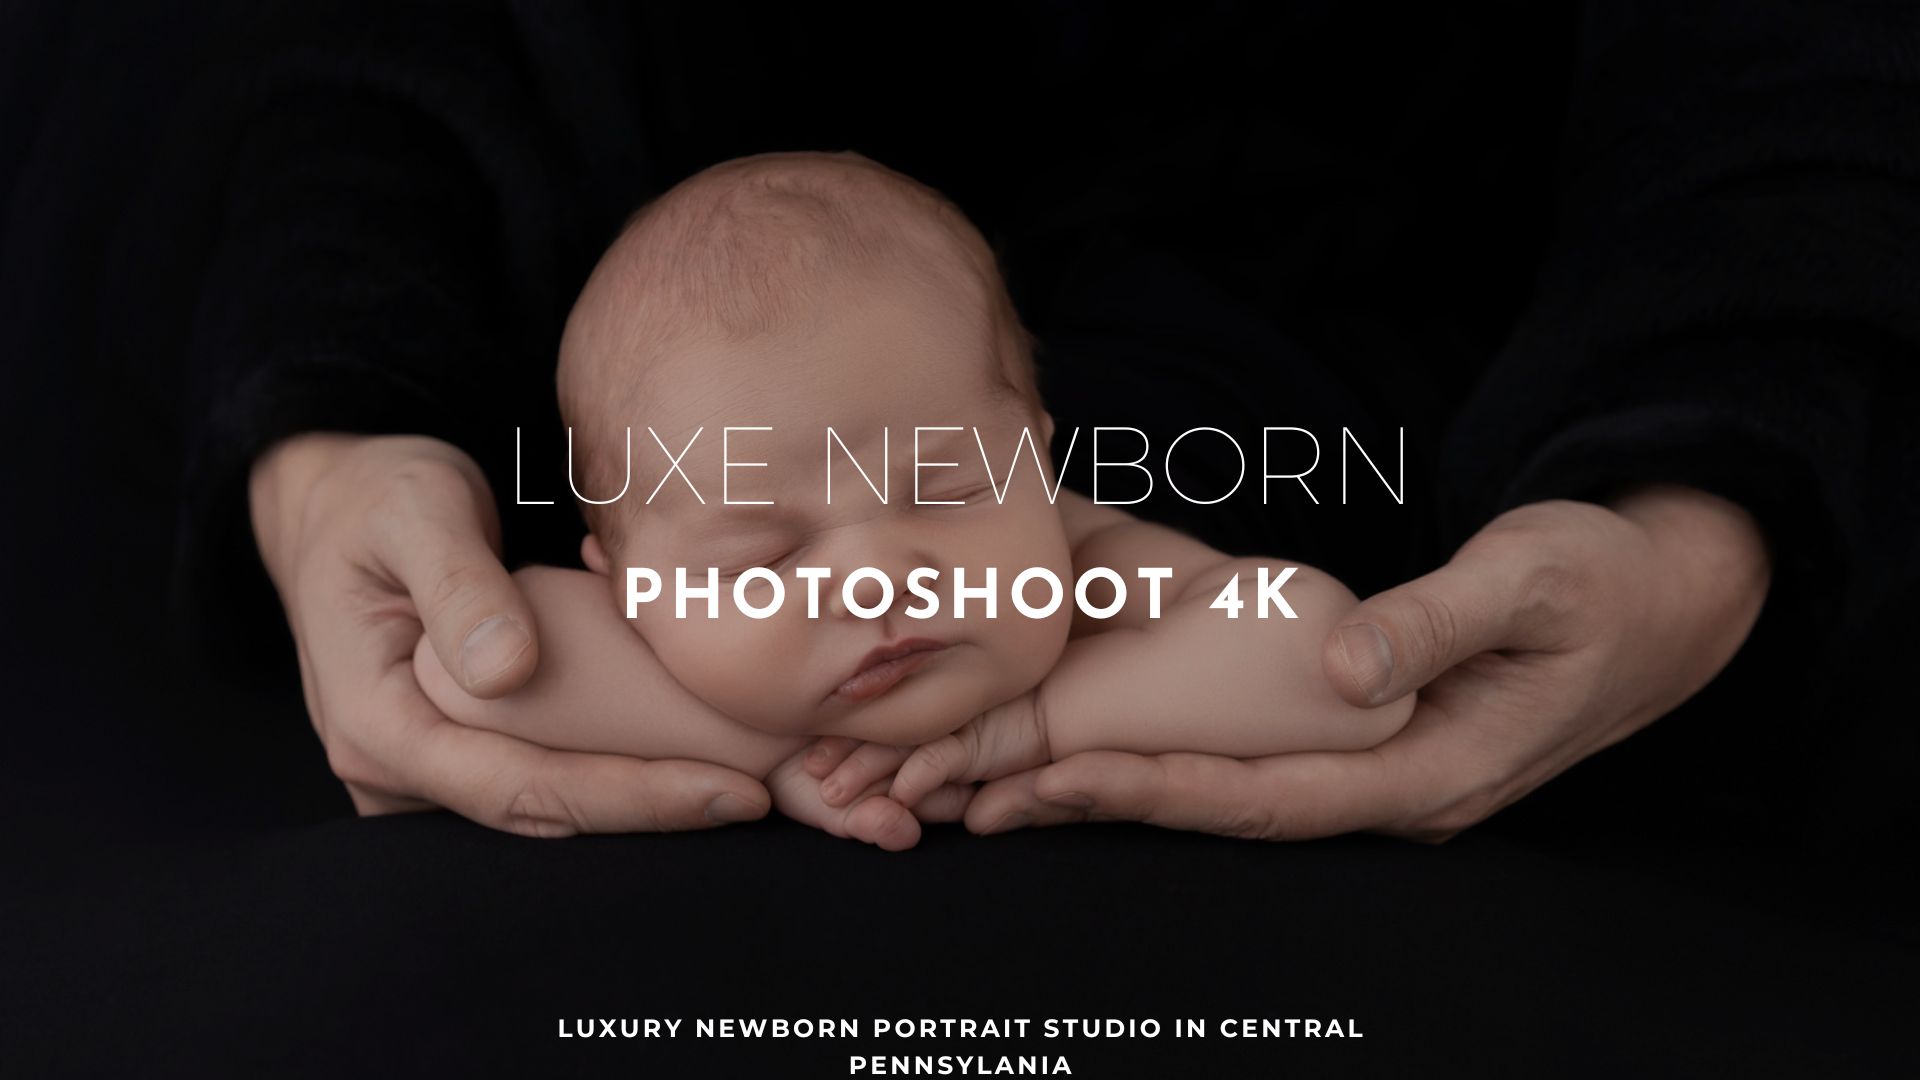 luxe newborn photoshoot featured blog